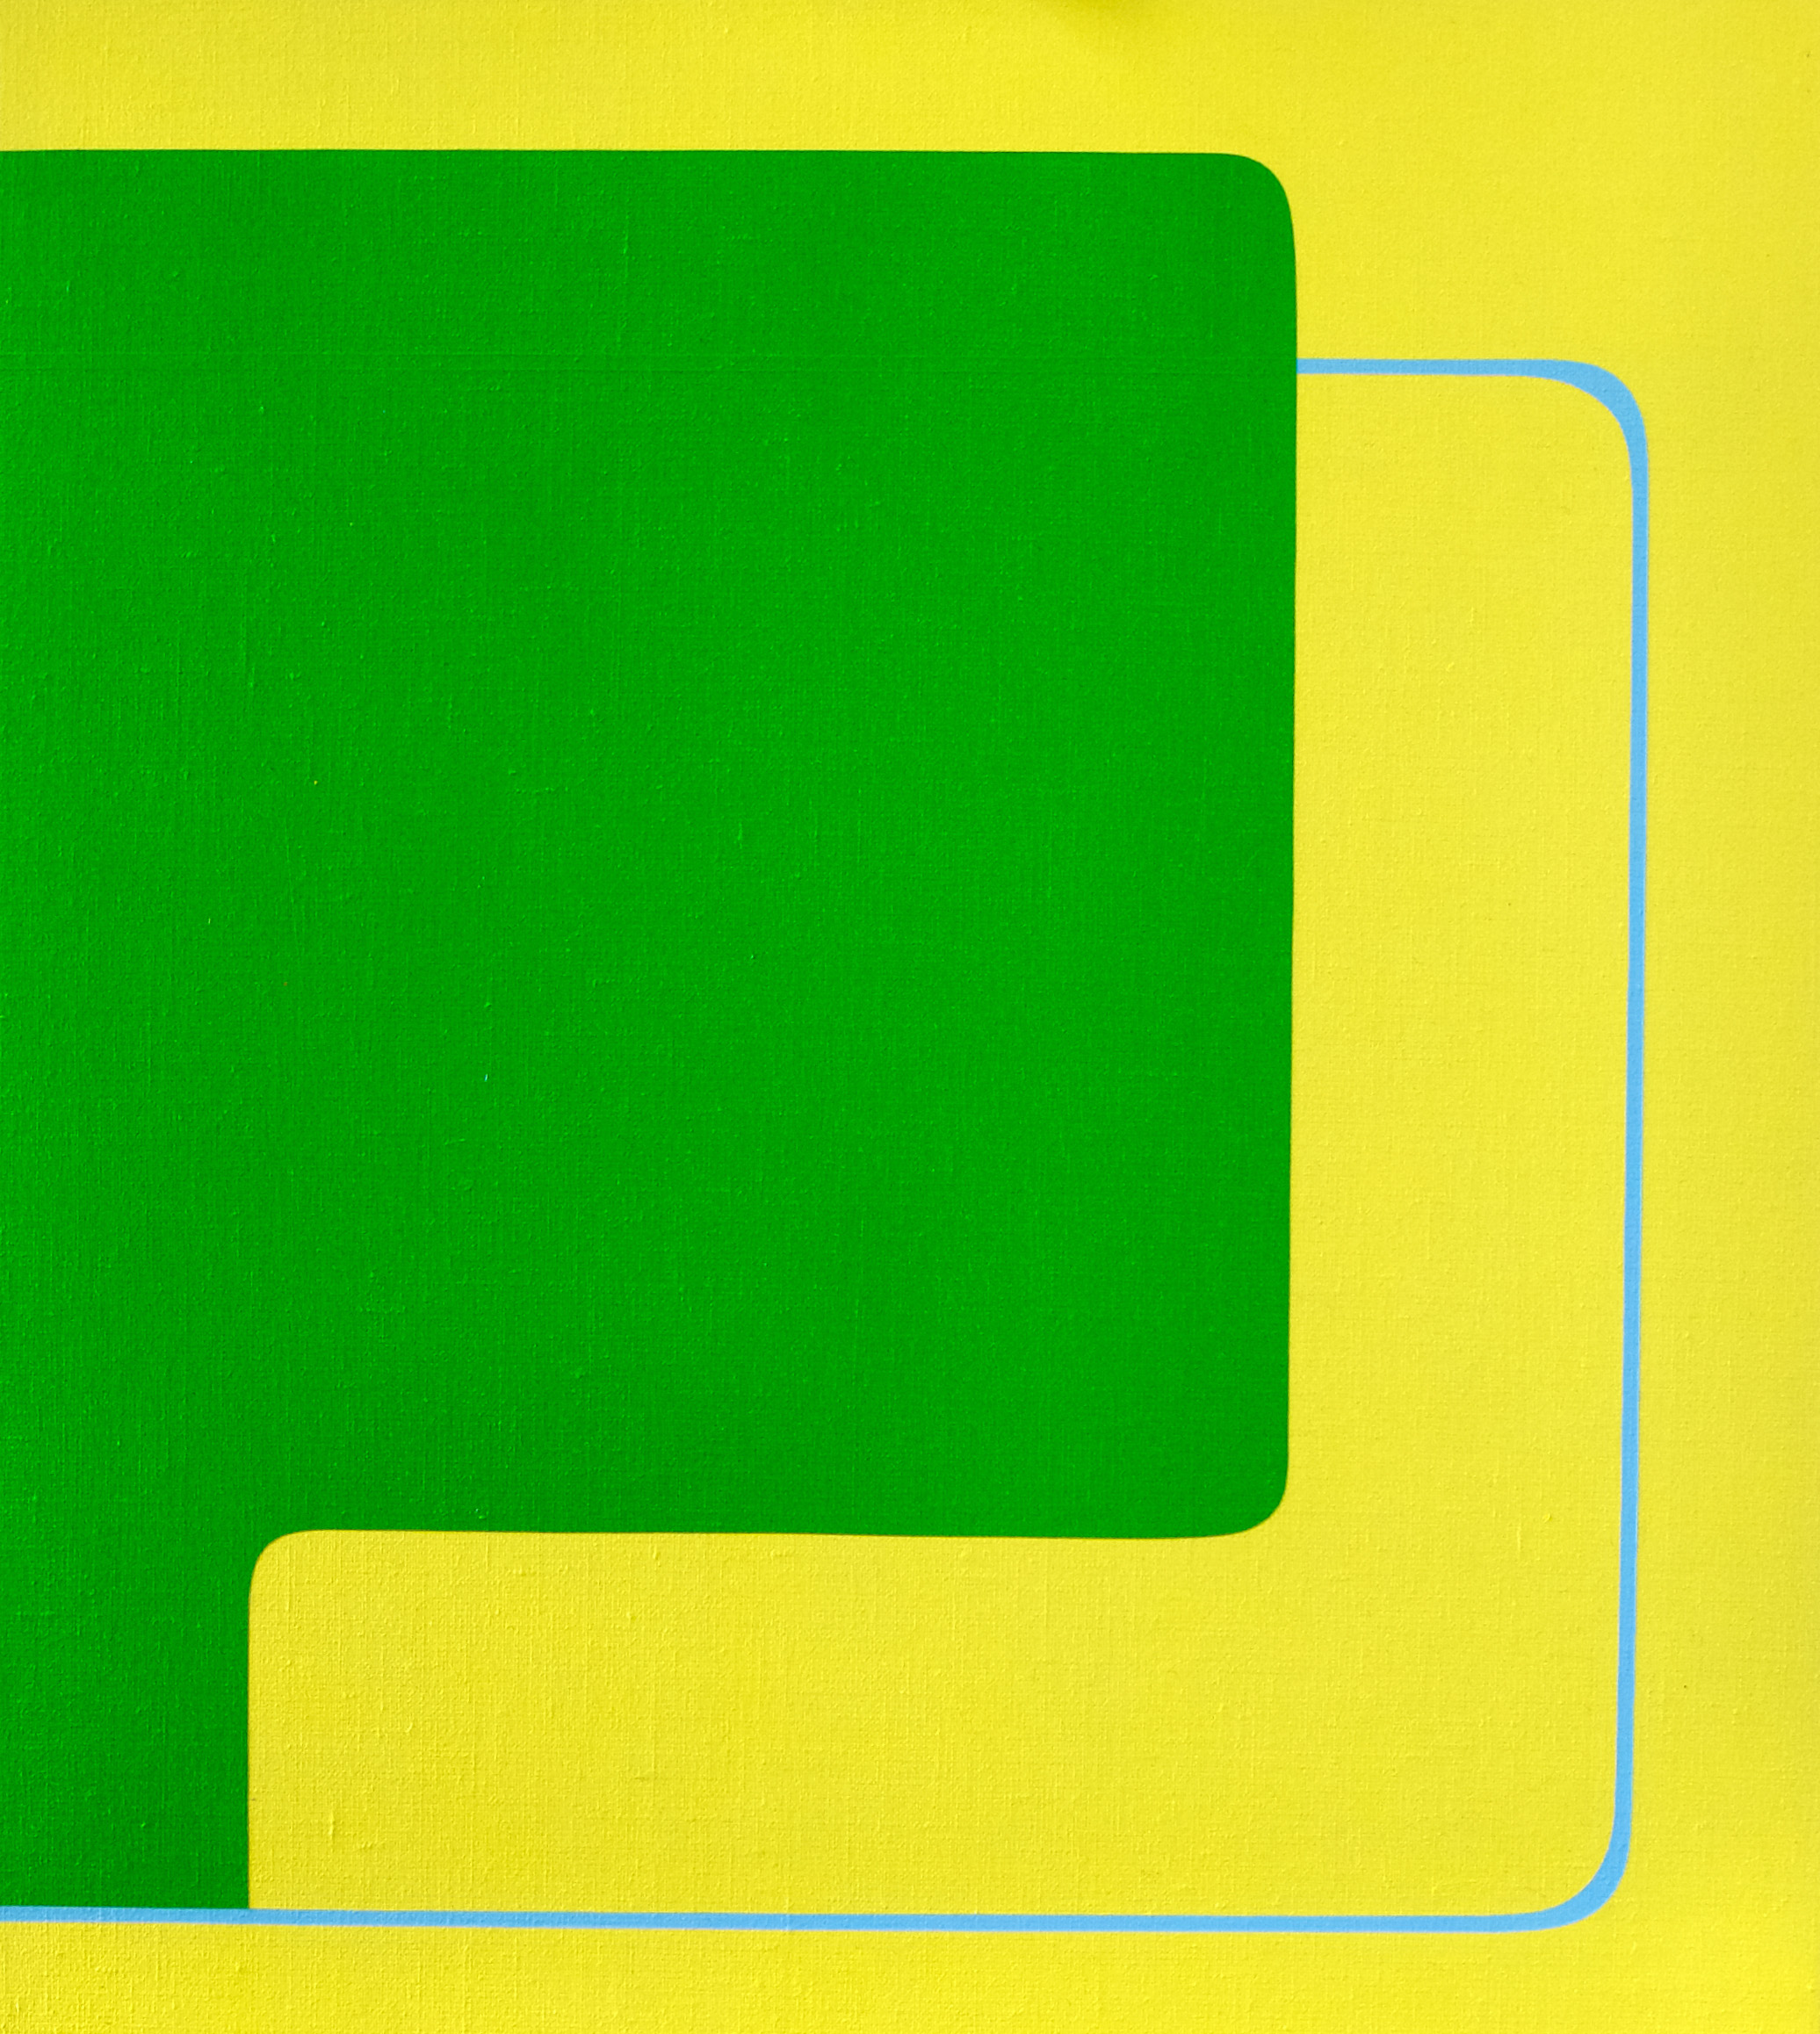 Matthew Browne 'Morii 17' vinyl tempera and oil on linen 45.5 x 40.5cm $4,600